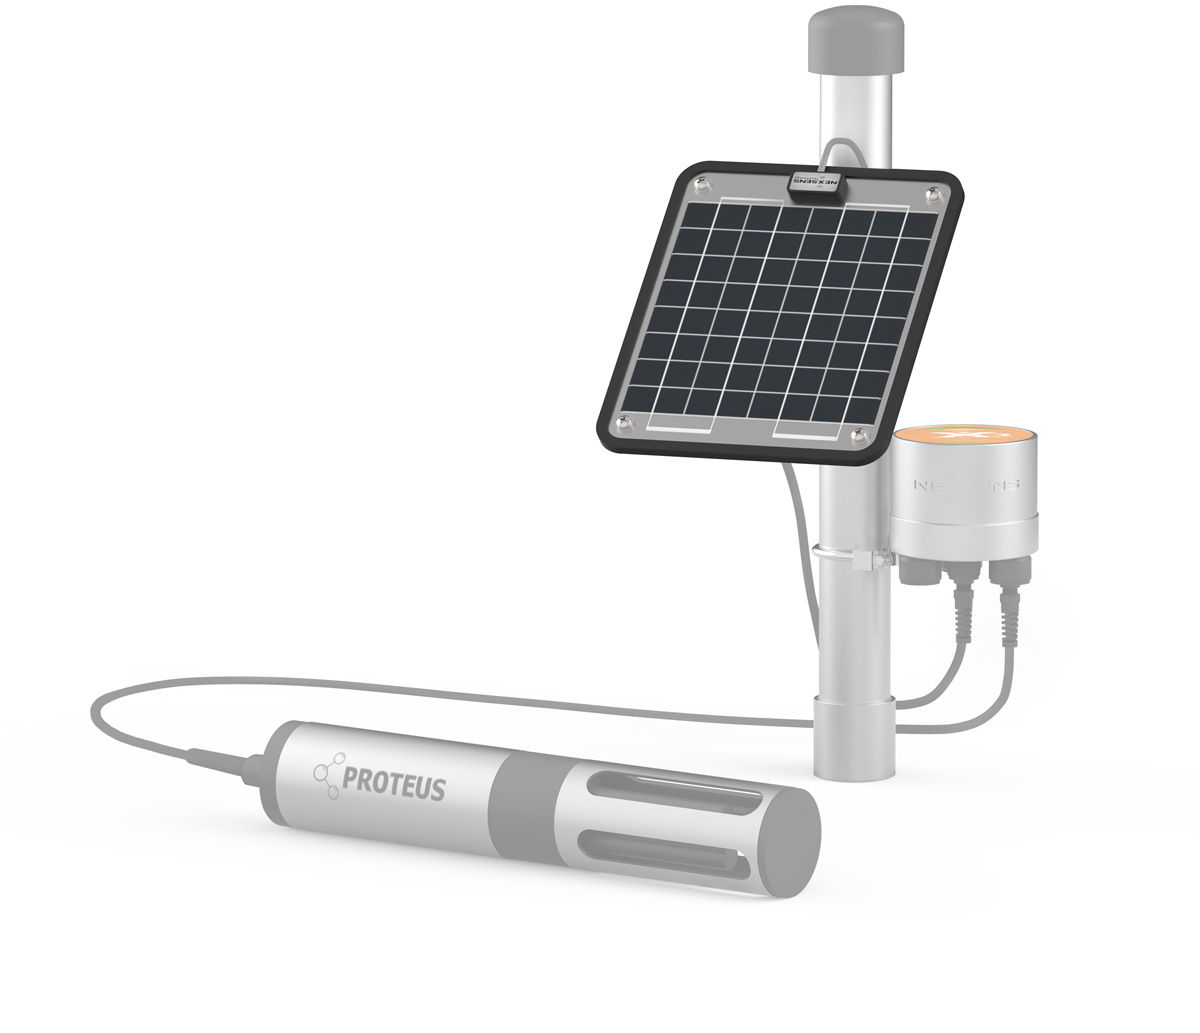 NexSens SP-Series Solar Power Packs